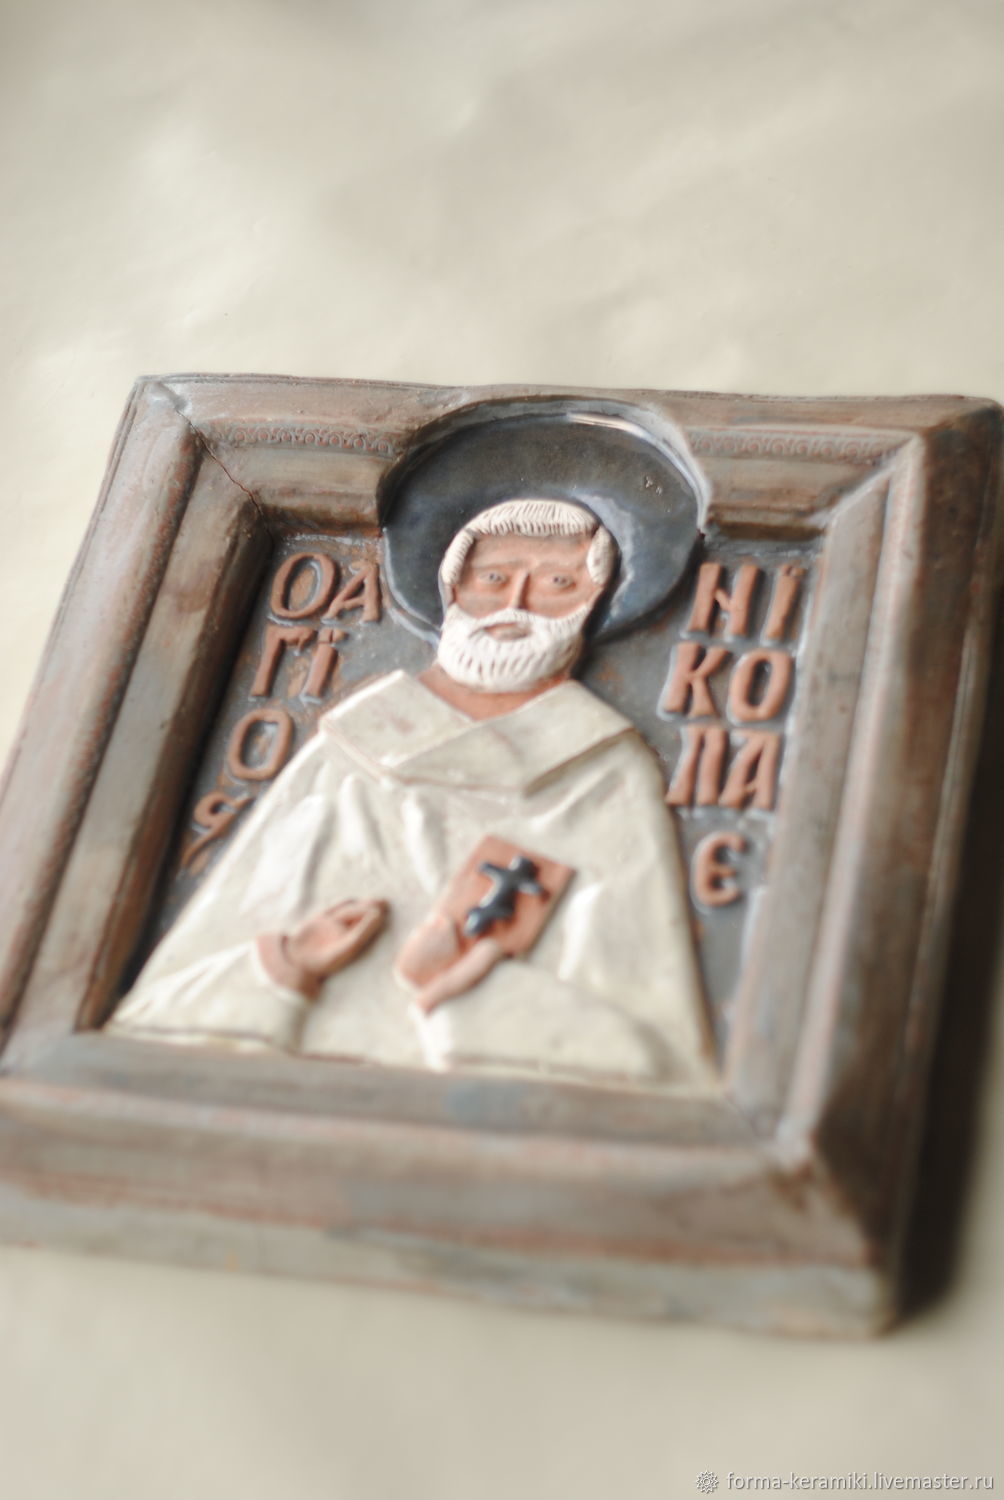 Икона Николая Чудотворца. Из керамики, Иконы, Абакан,  Фото №1